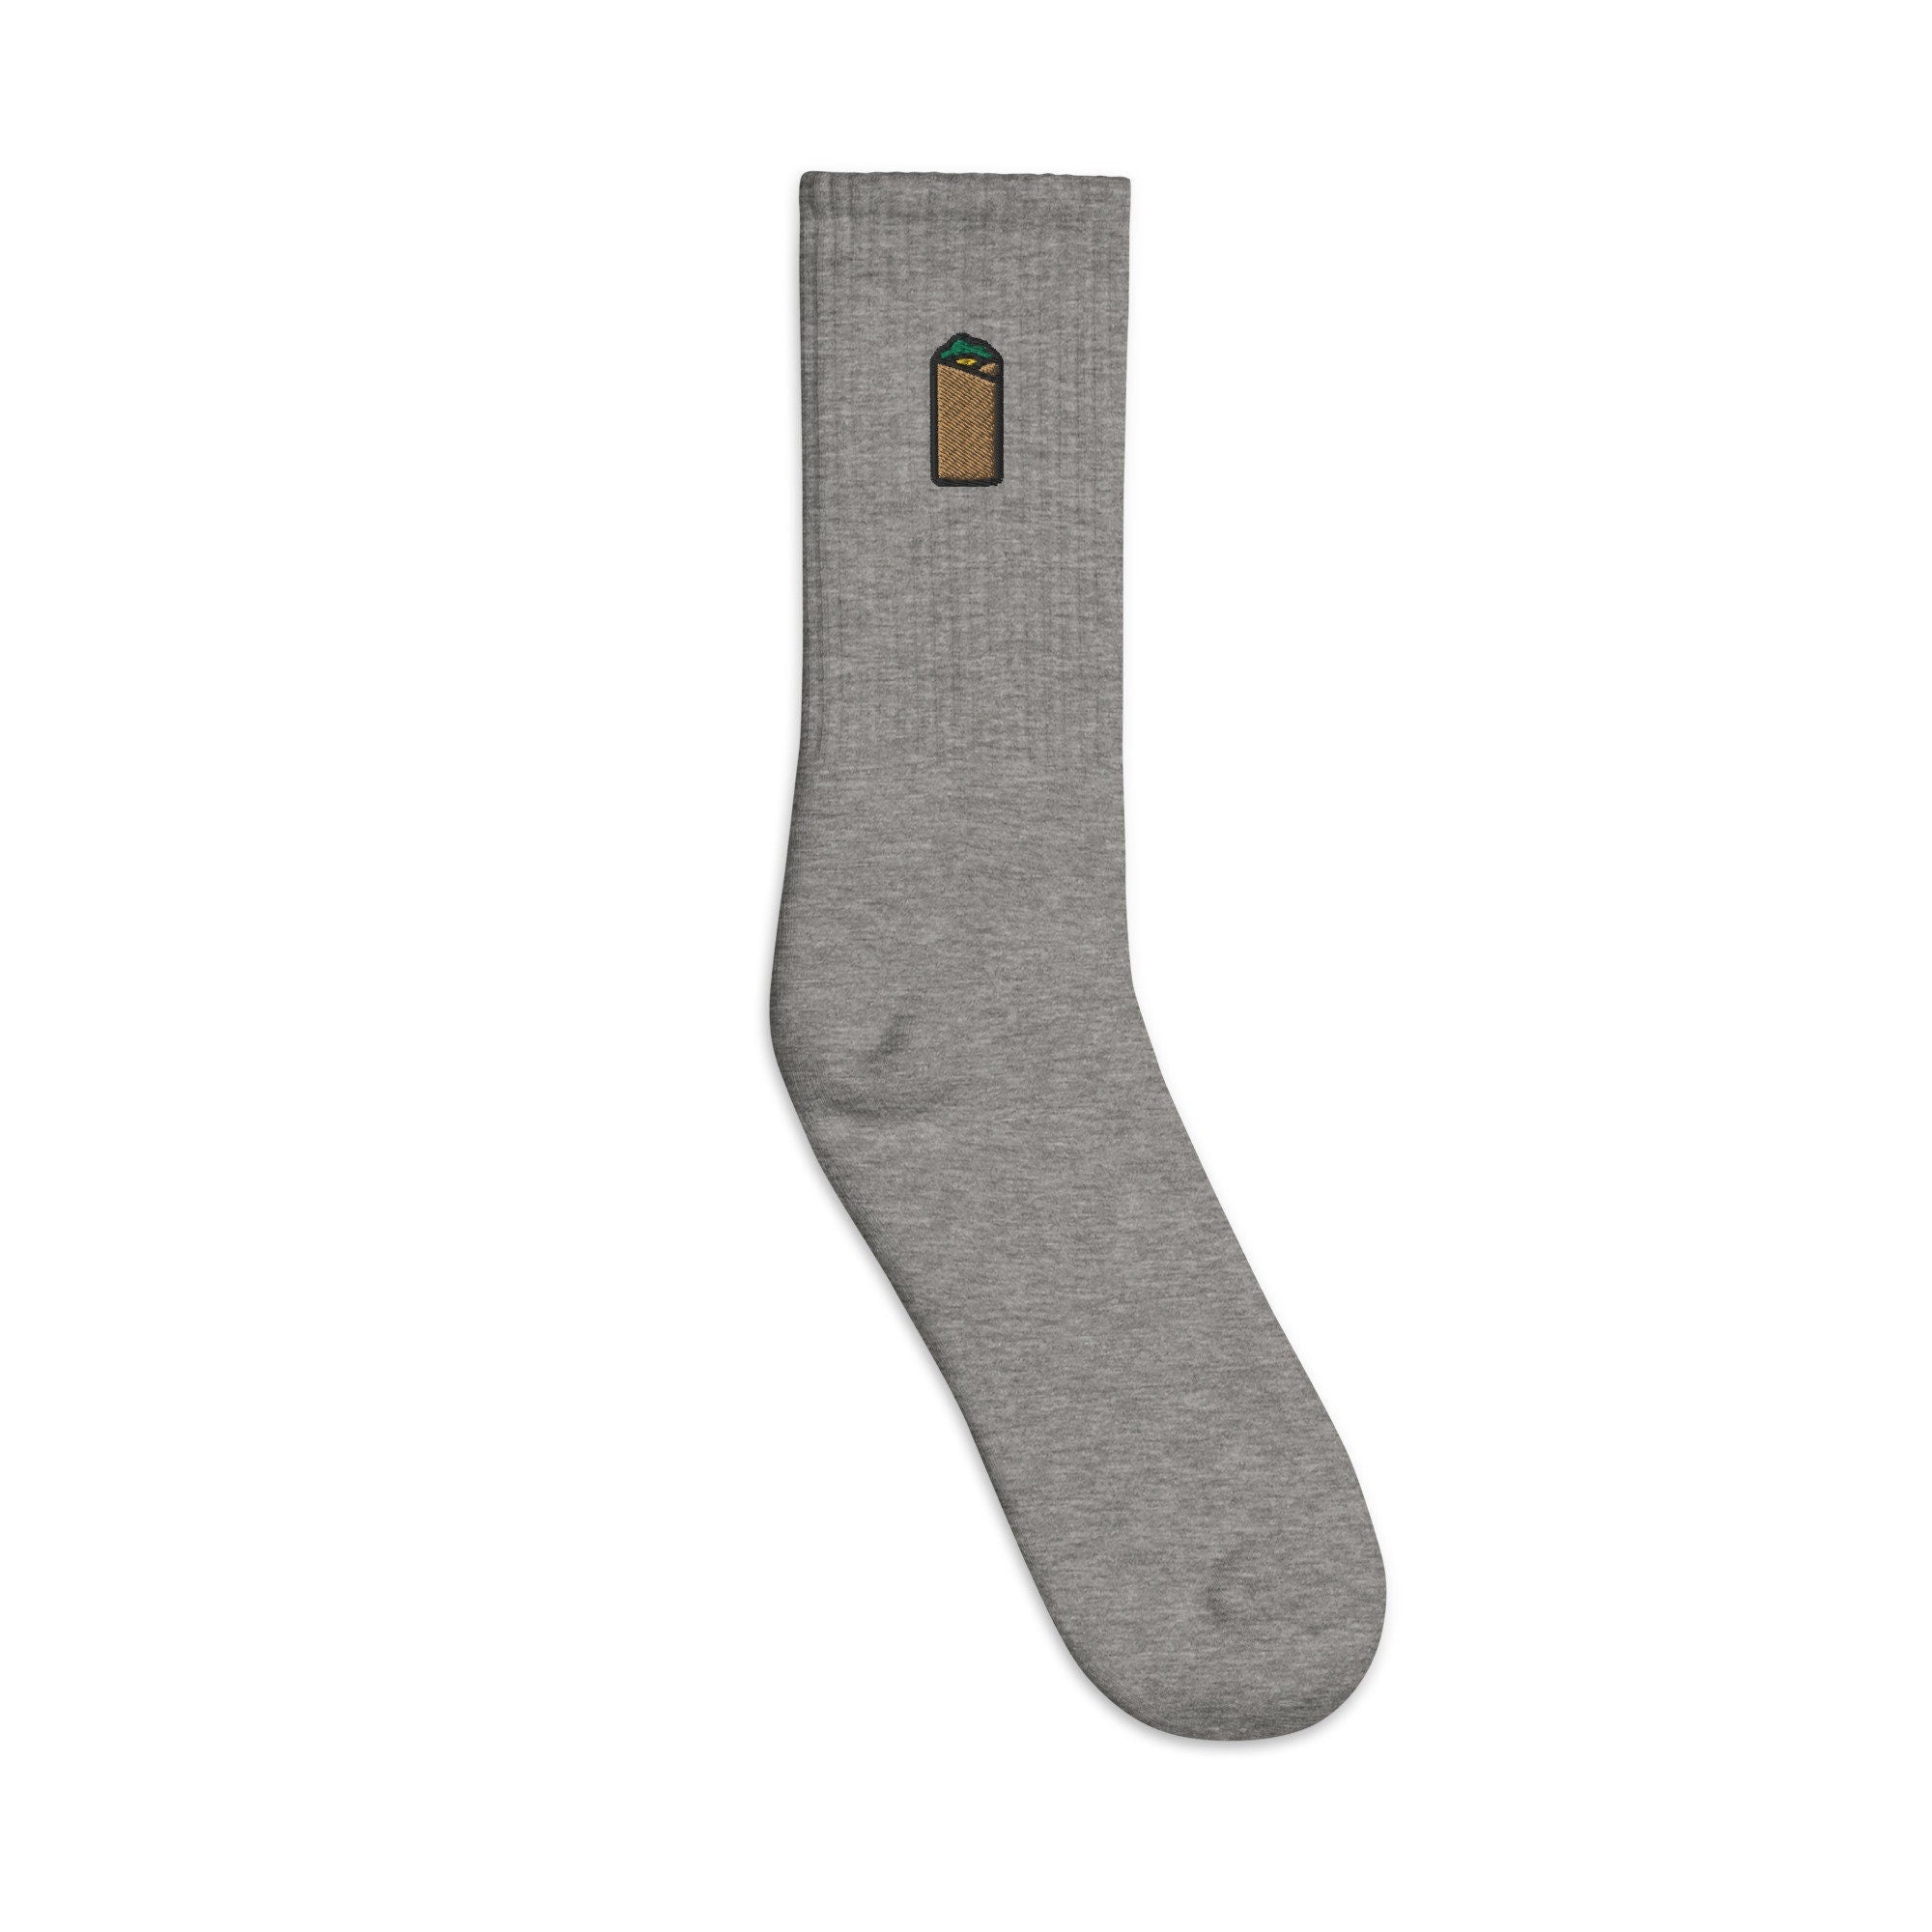 Burrito Embroidered Socks, Premium Embroidered Socks, Long Socks Gift - Multiple Colors